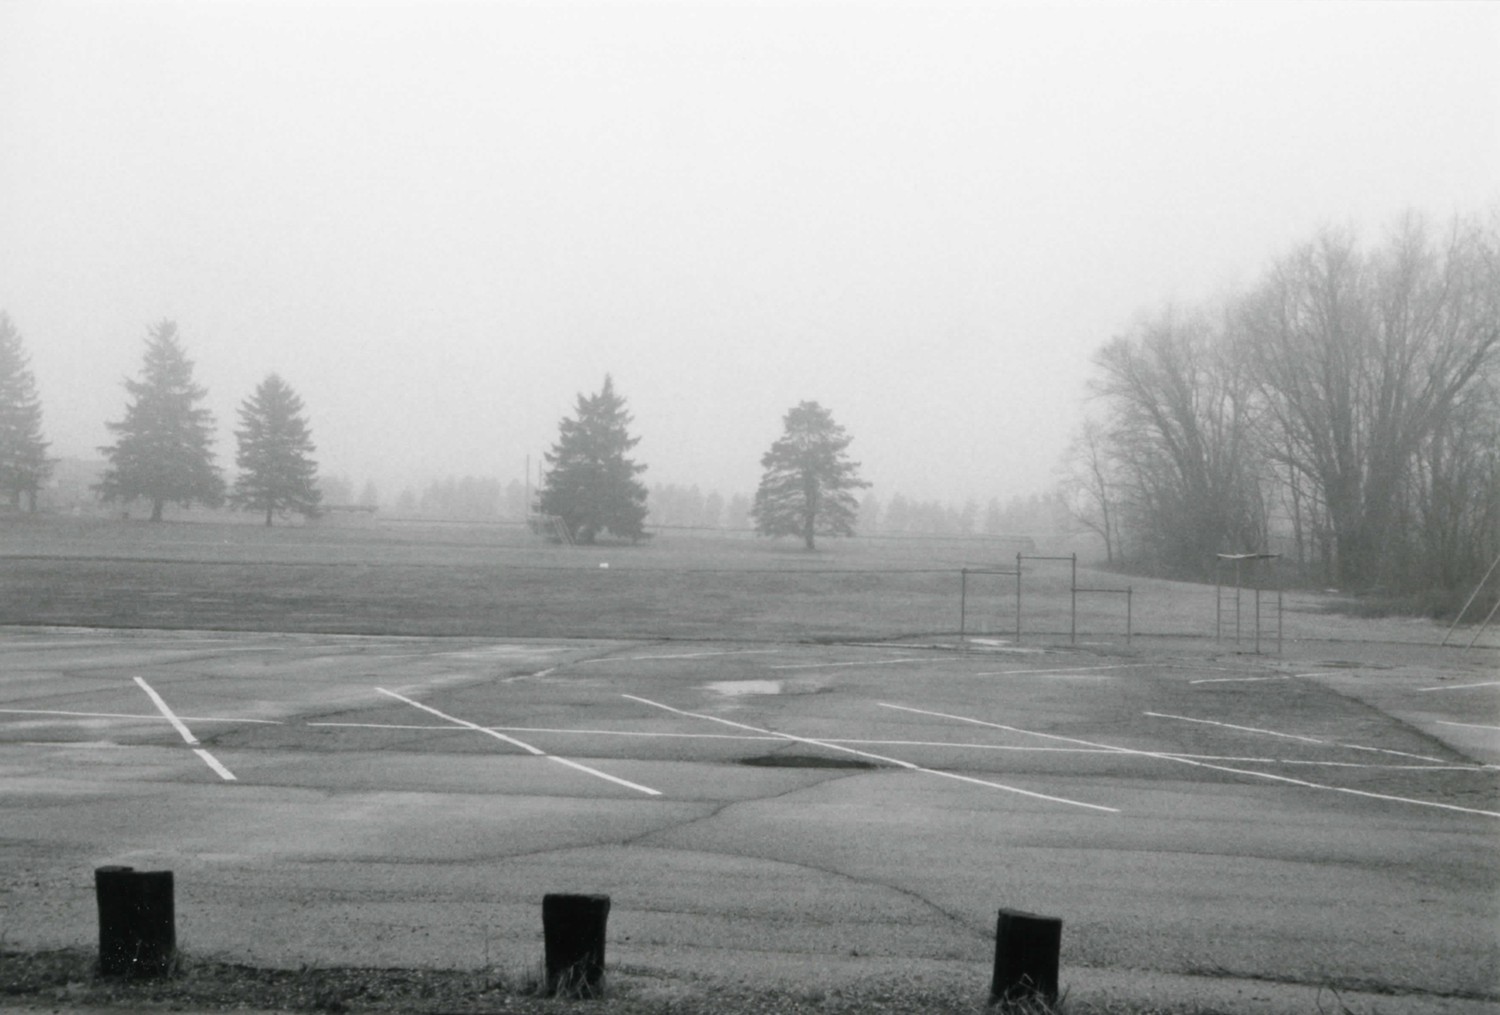 Springfield Township School, Ontario Ohio Rear setting (2002)